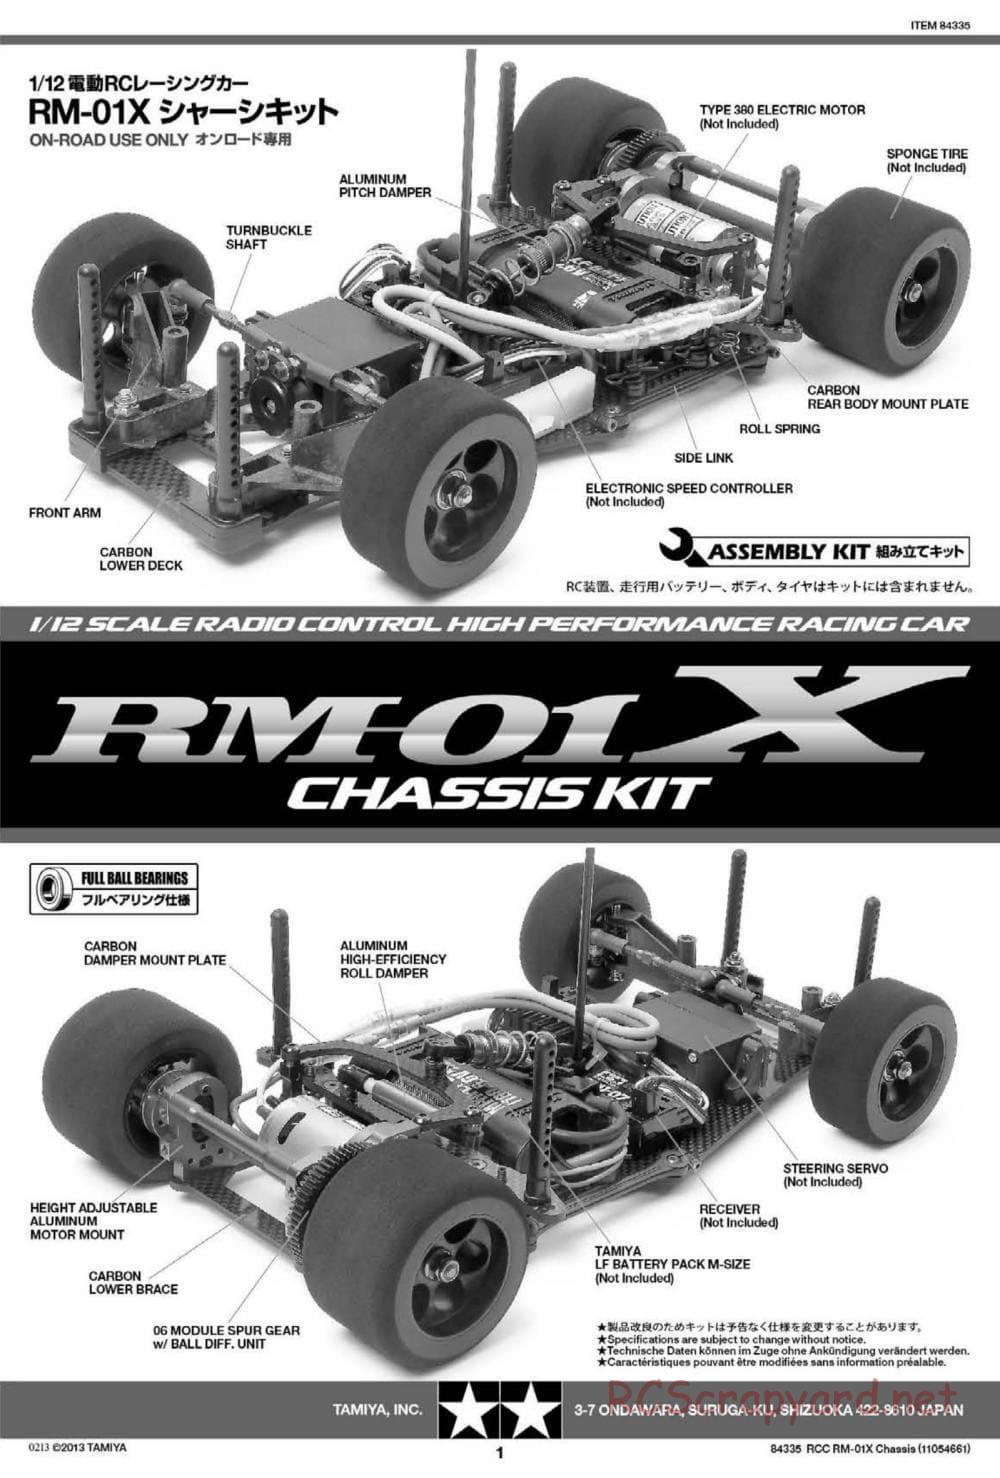 Tamiya - RM-01X Chassis - Manual - Page 1